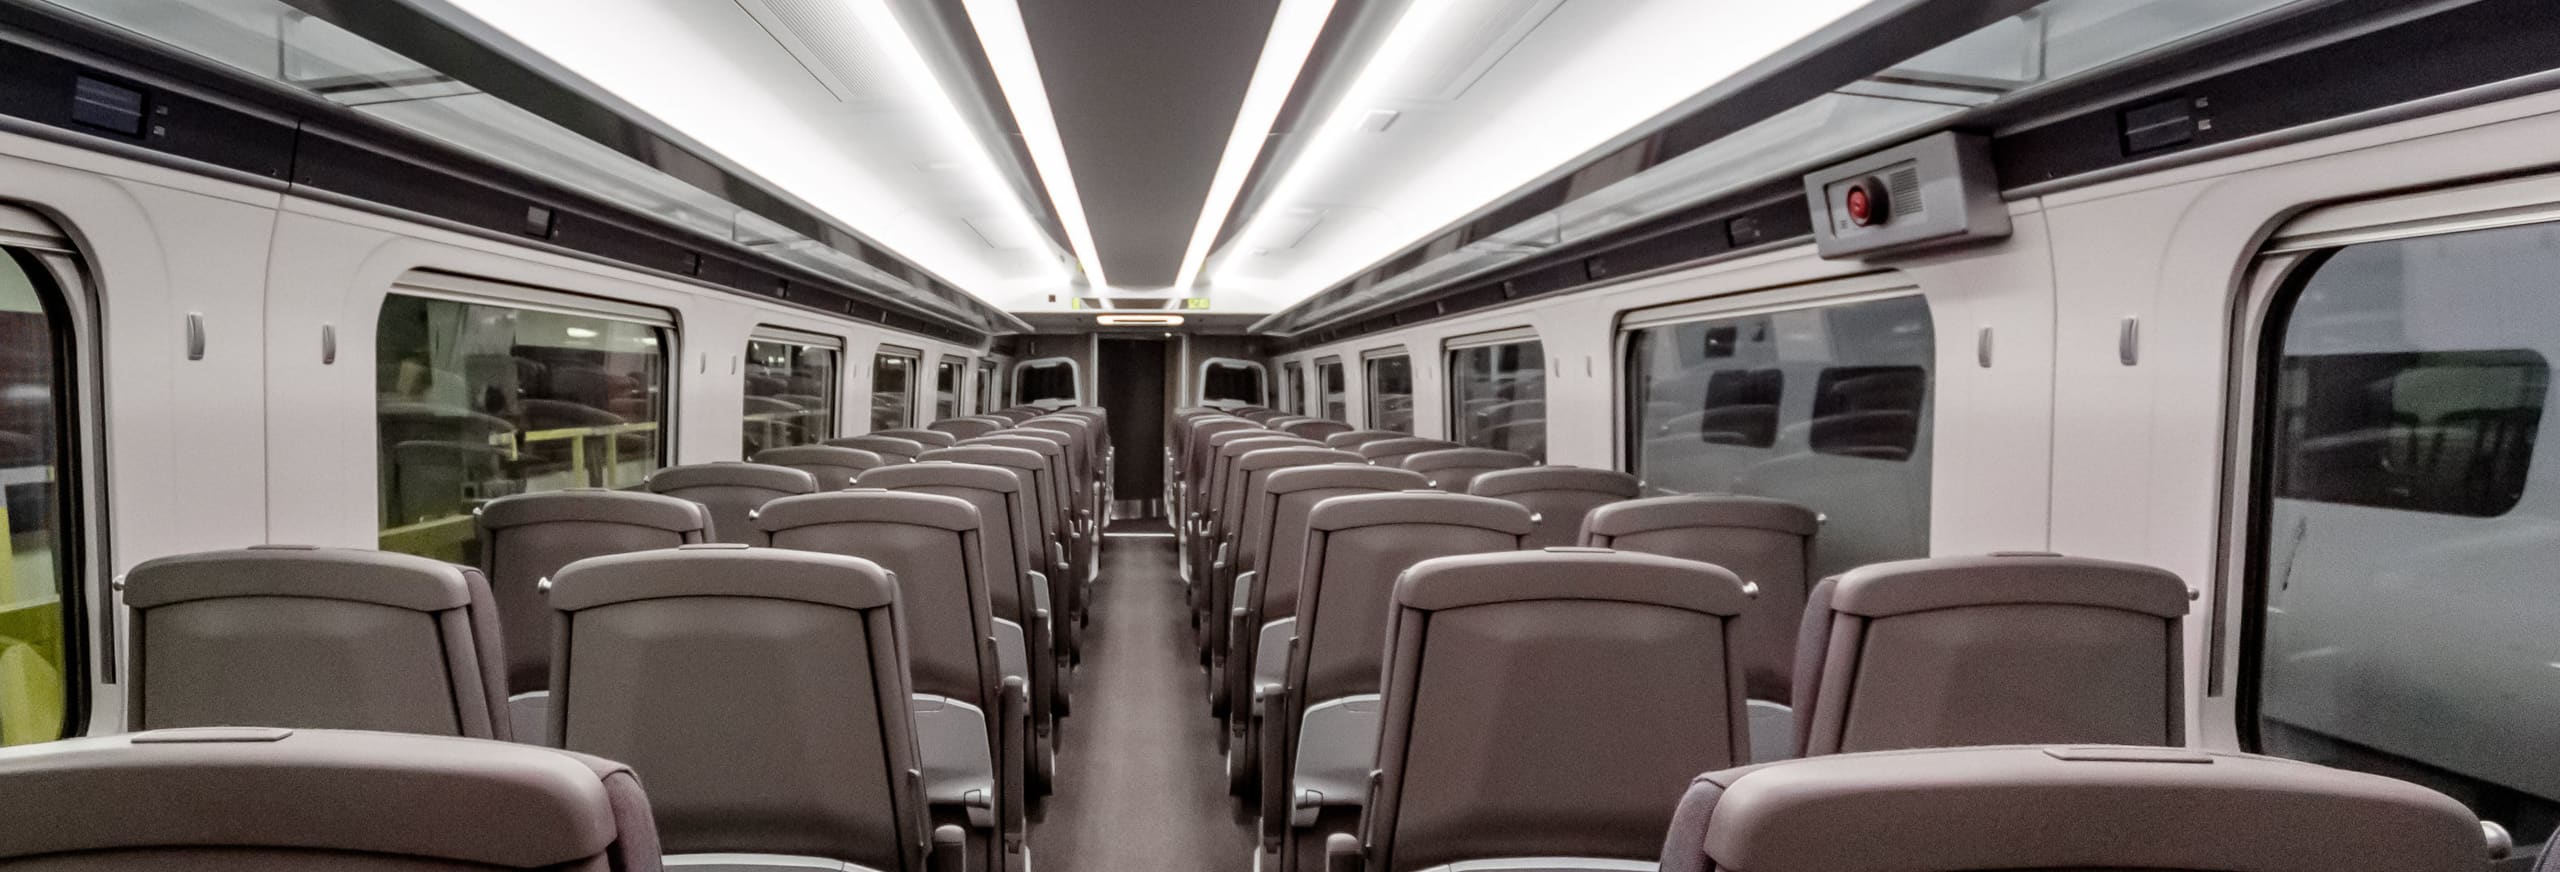 Example of new Hitachi train interior